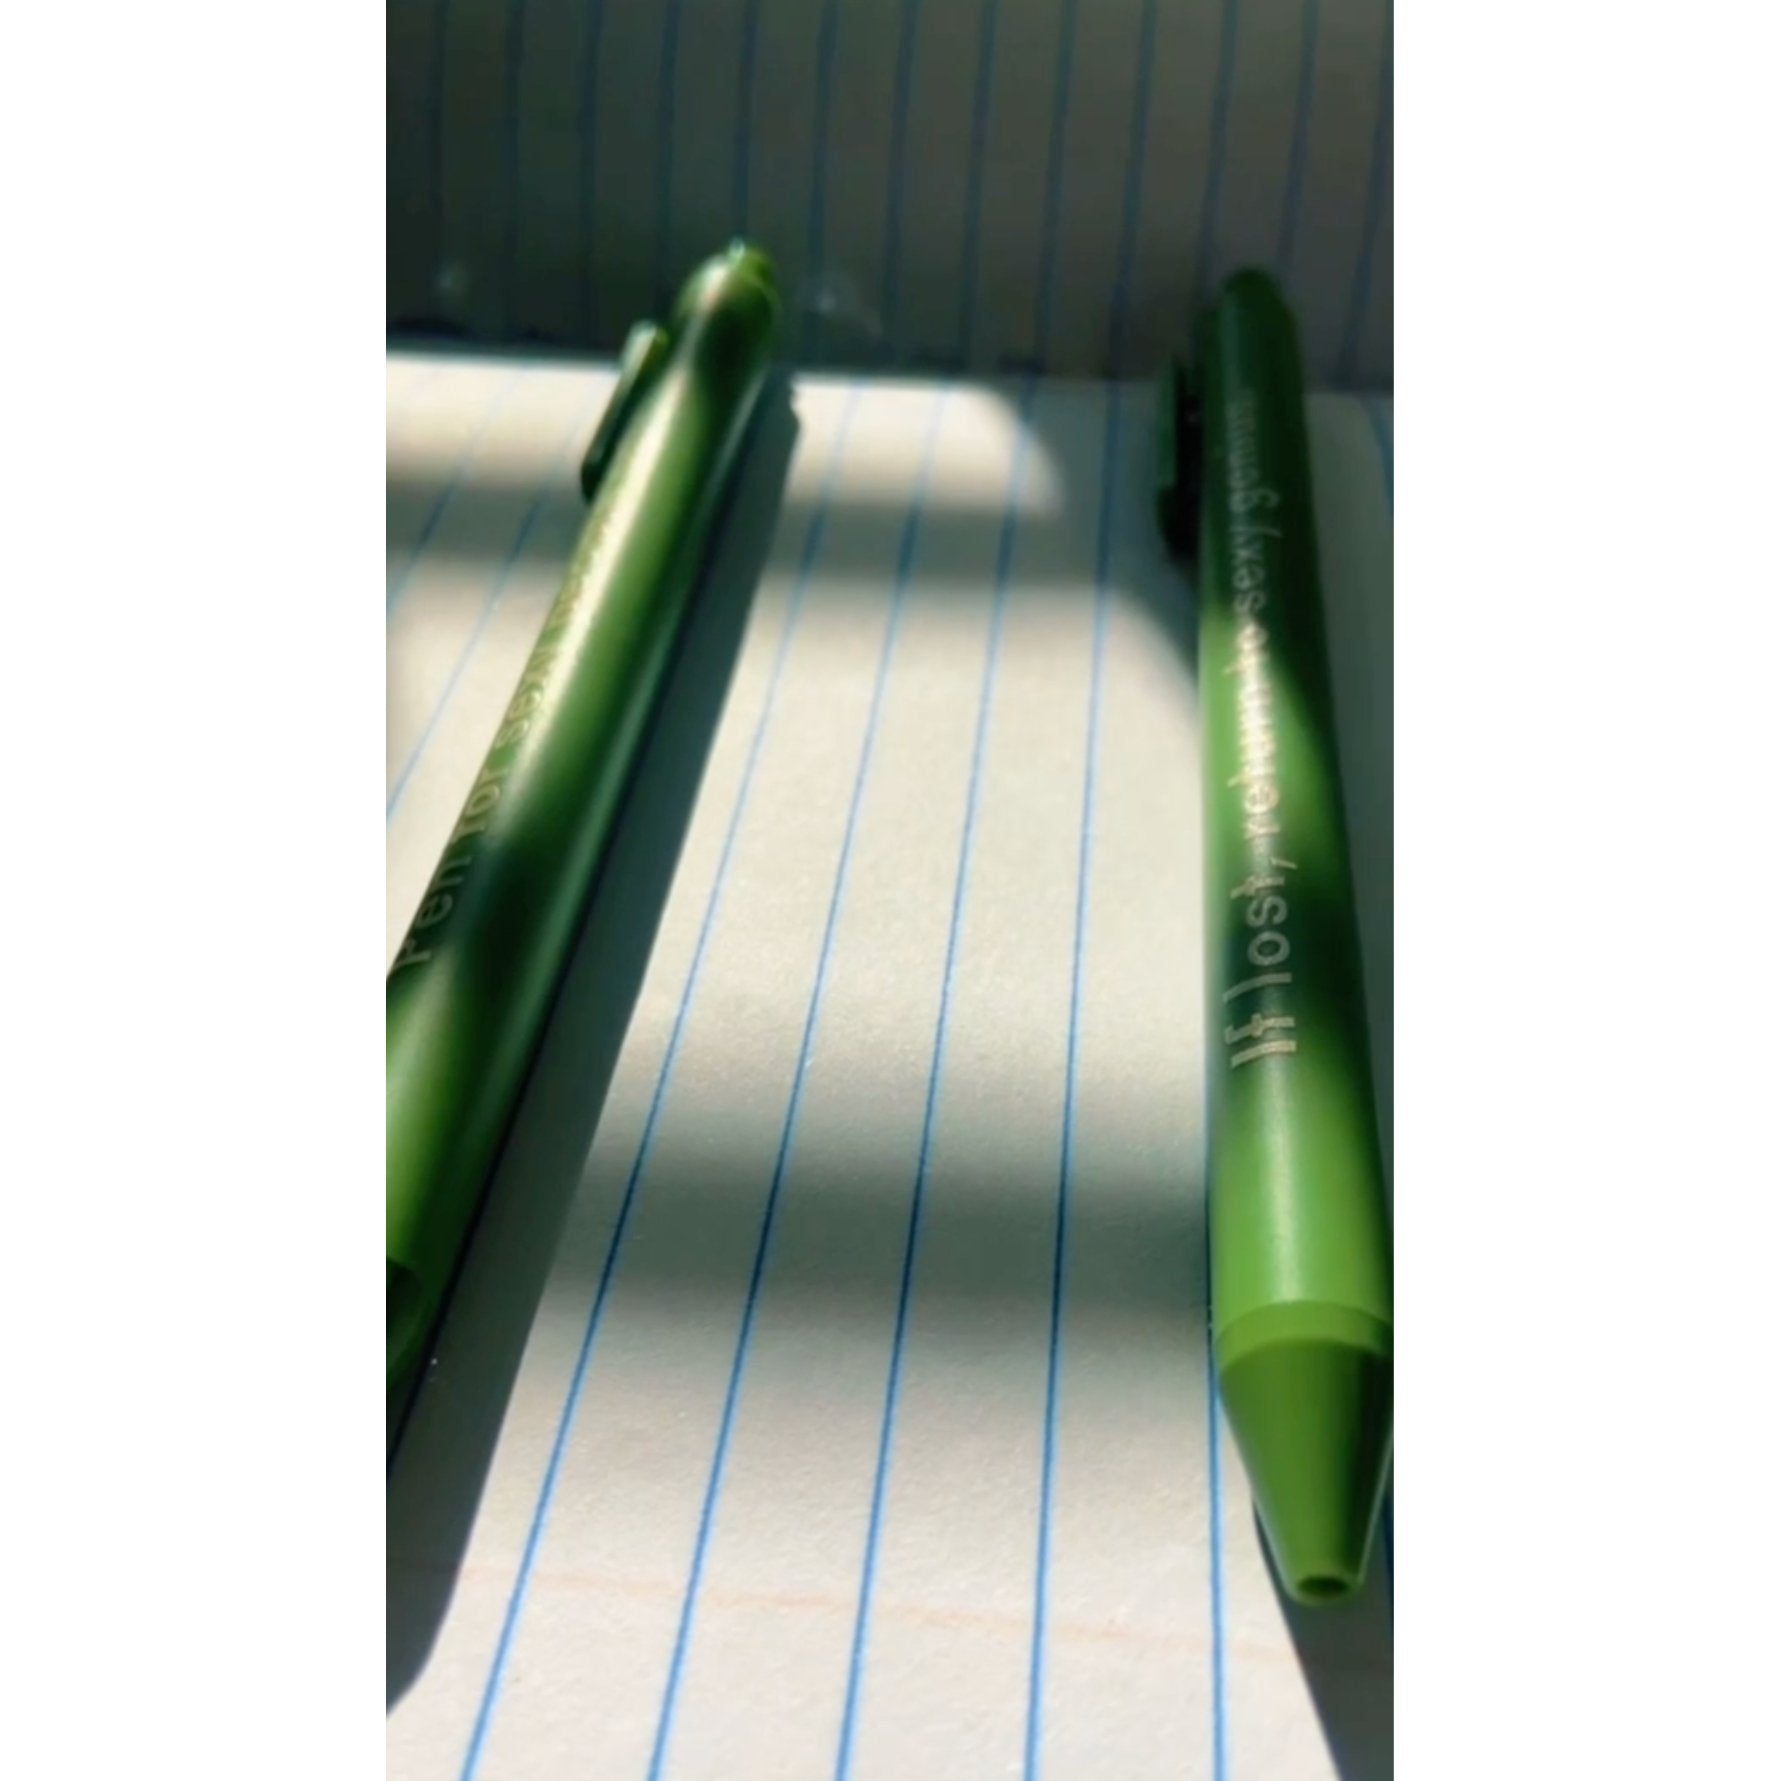 If Lost, Return To Sexy Genius Pen 🌹 | Gel Click Pen in Olive Green